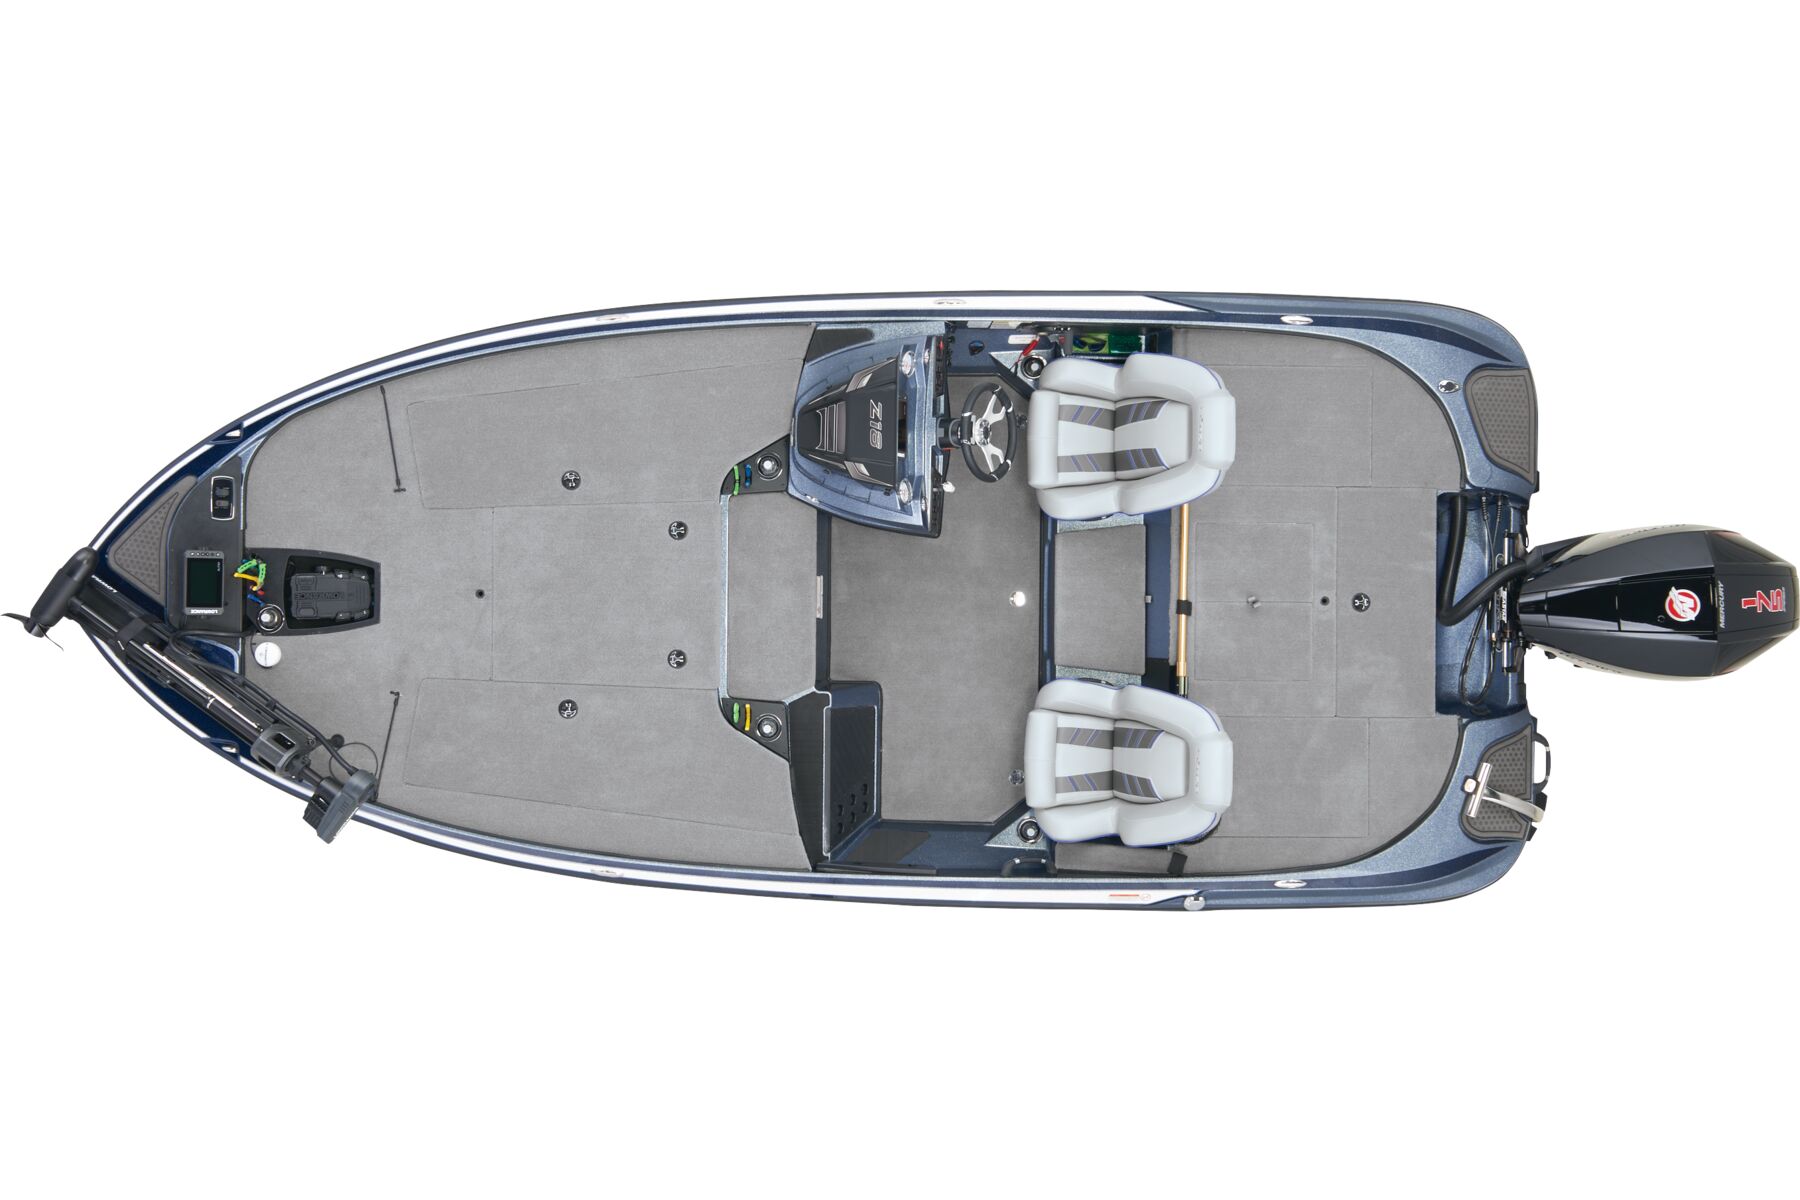 CM 16 Waterproof Boating Dry Box Fits Marine Boating GPS Fish